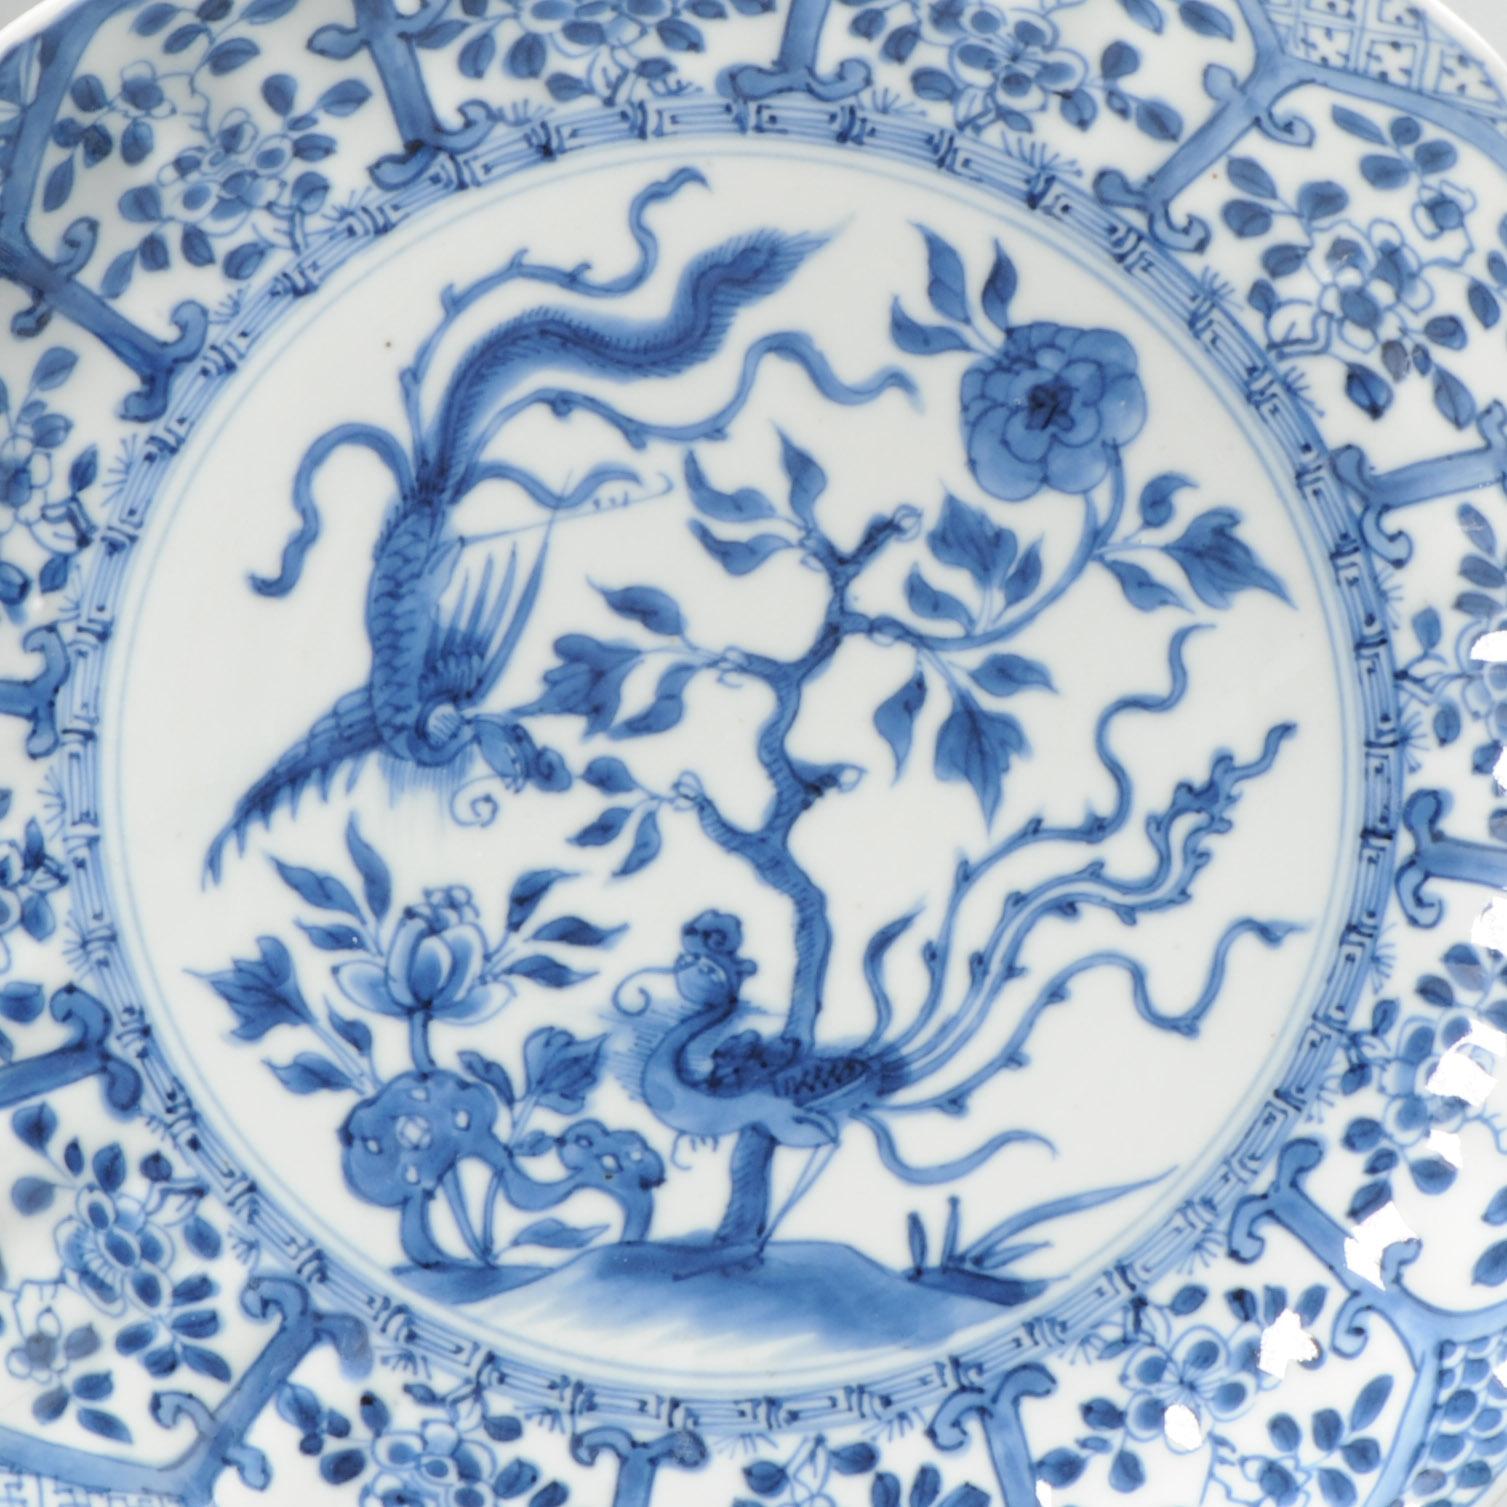 Antiker Fenghuang-Teller aus chinesischem Porzellan aus der Kangxi-Periode um 1700 (Qing-Dynastie) im Angebot